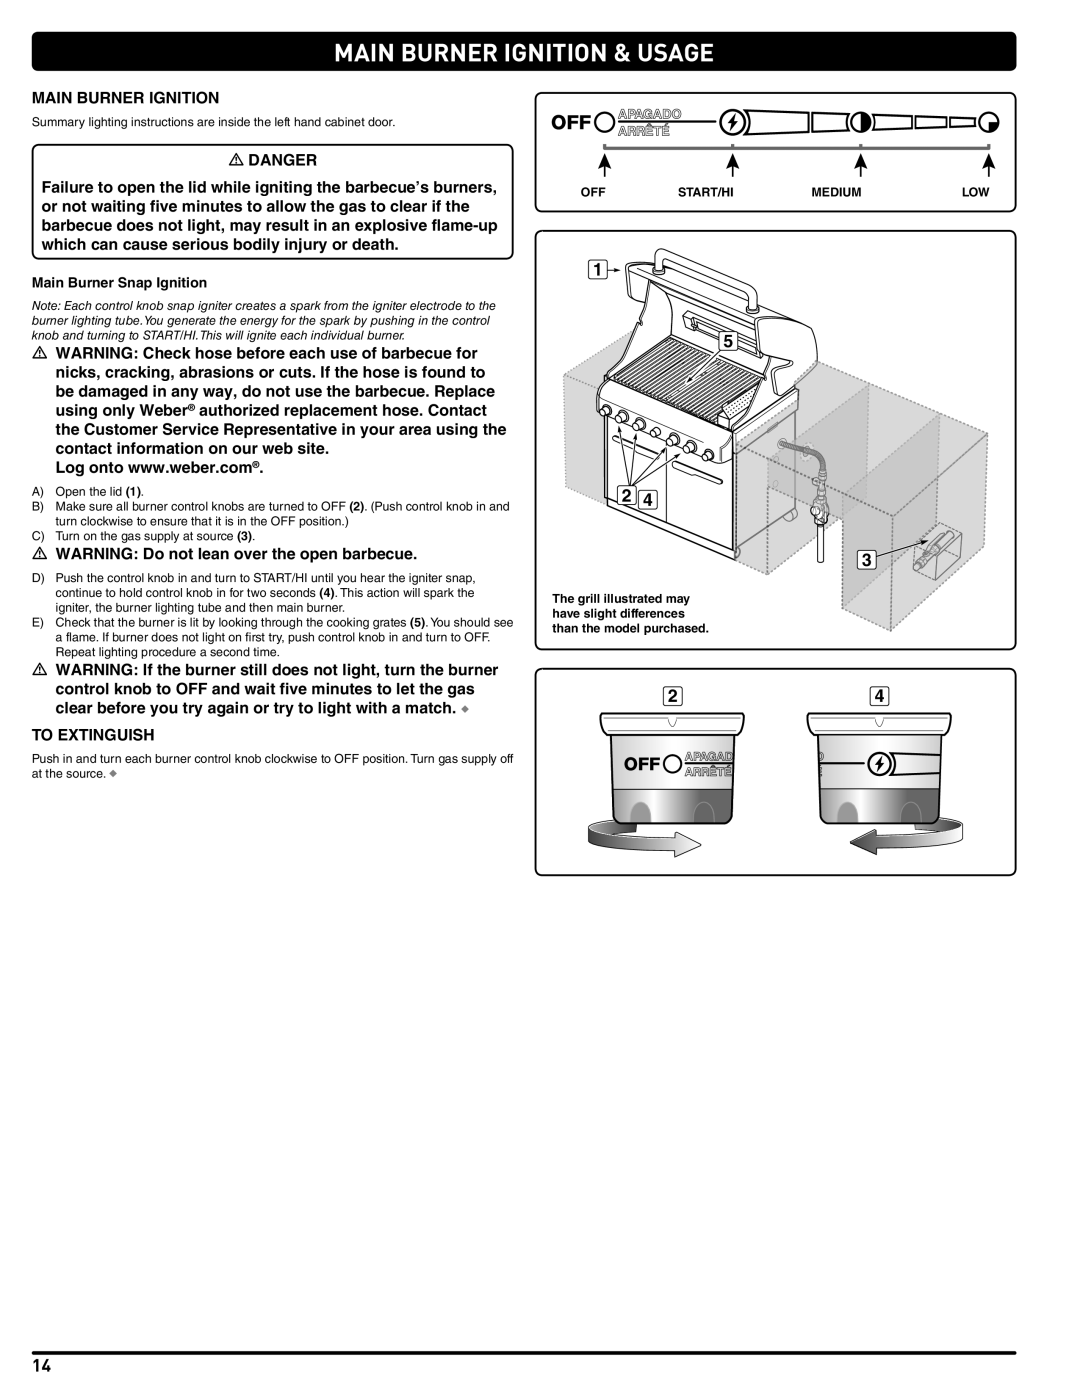 Weber Summit Gas Grill, 56576 manual Main Burner Ignition & Usage, Main Burner Snap Ignition 